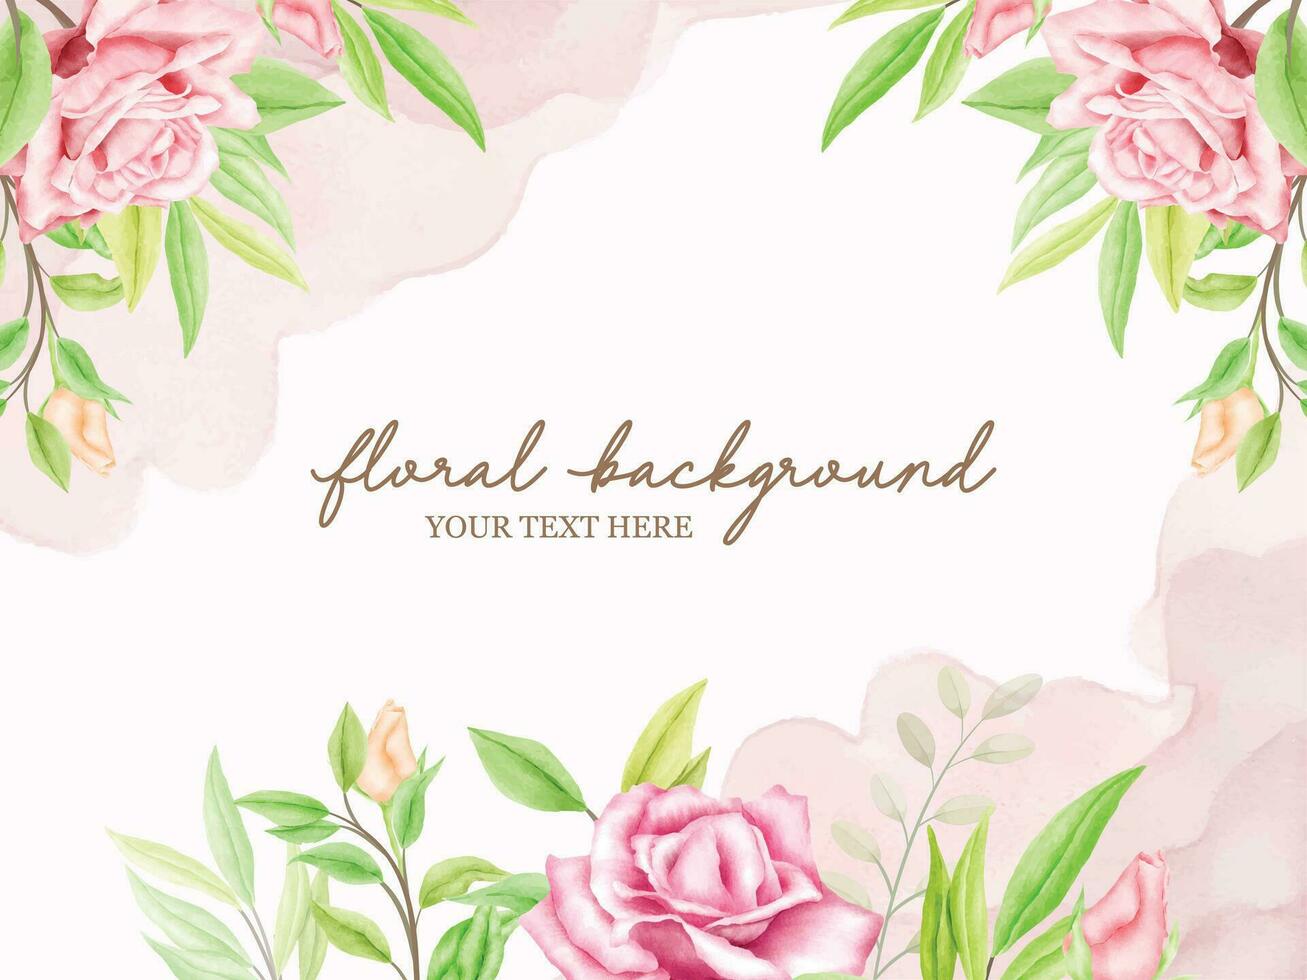 Floral Wedding Banner Background Template Designs vector